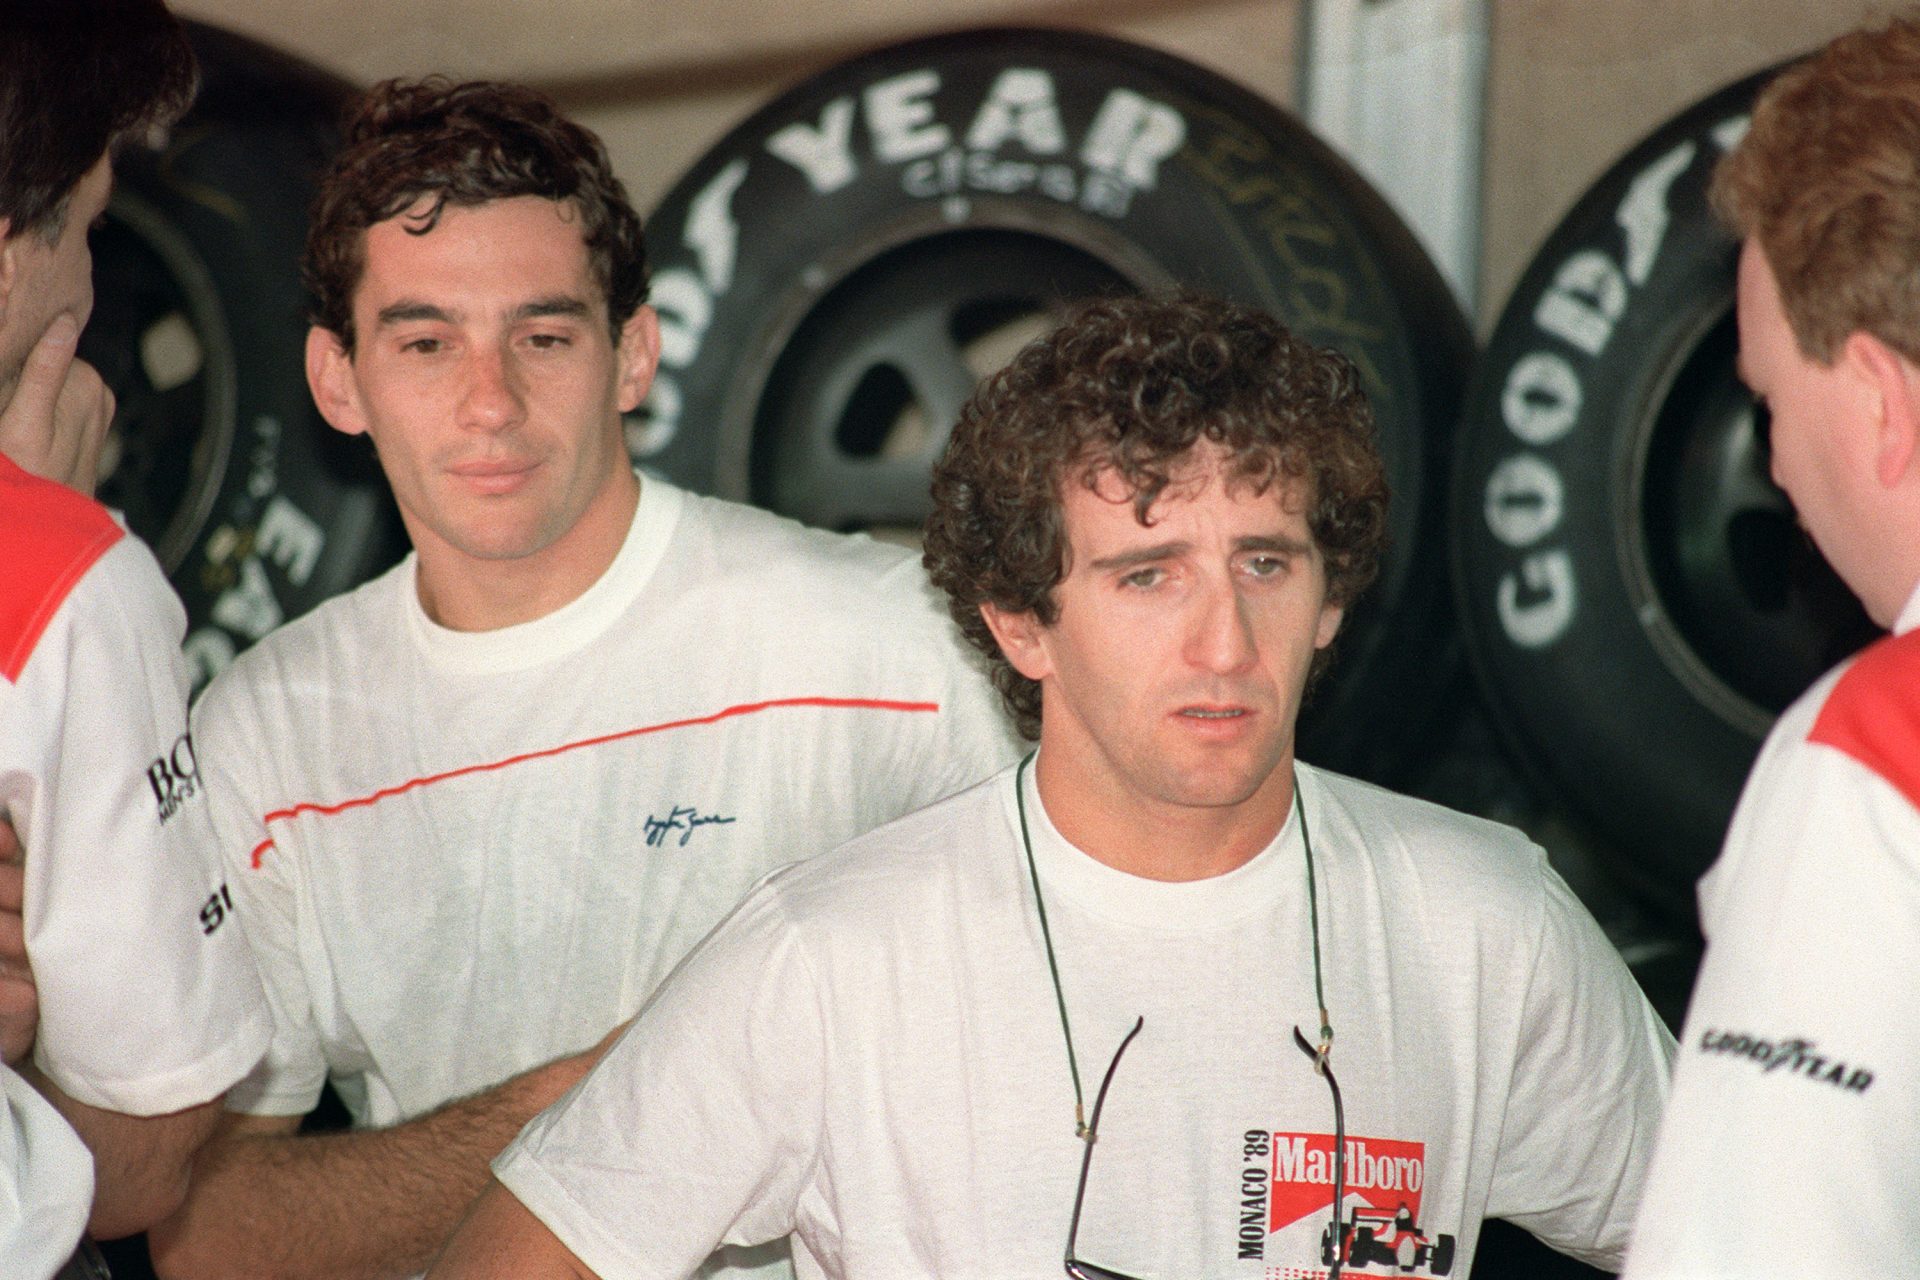 Senna and Prost